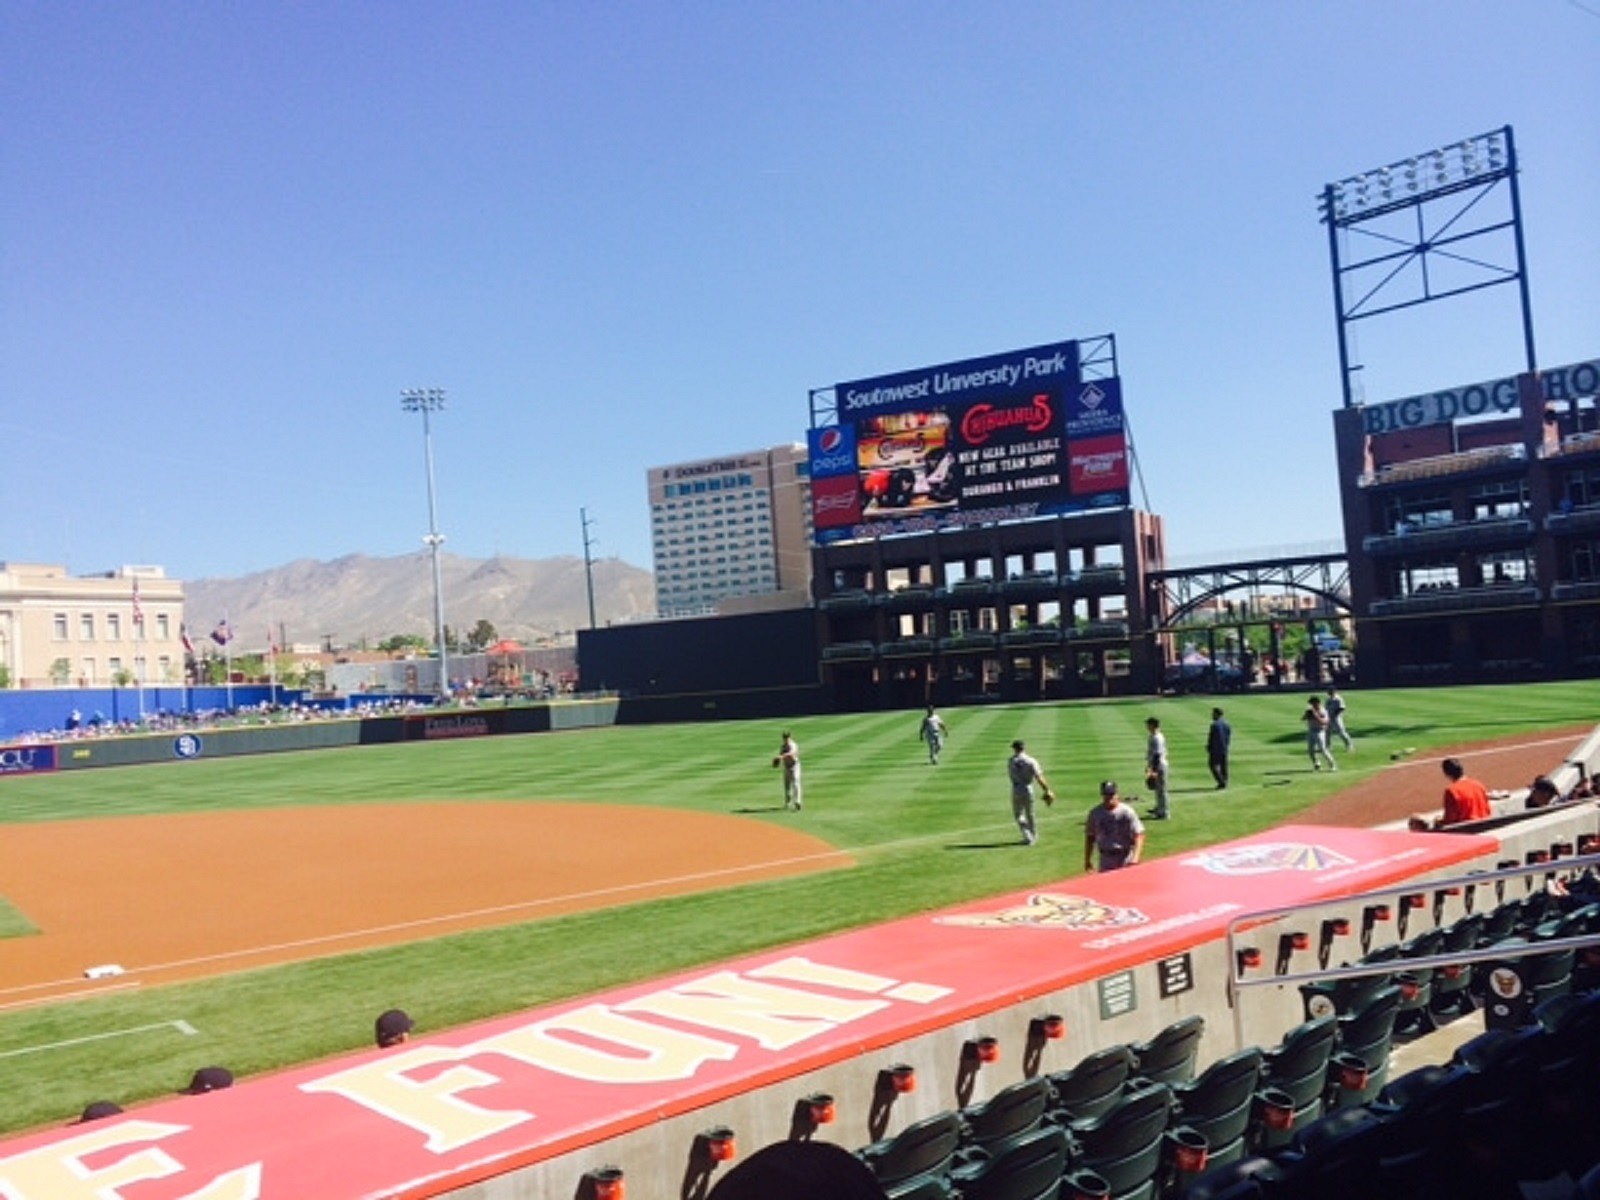 El Paso Chihuahuas individual game tickets for 10th-year season go